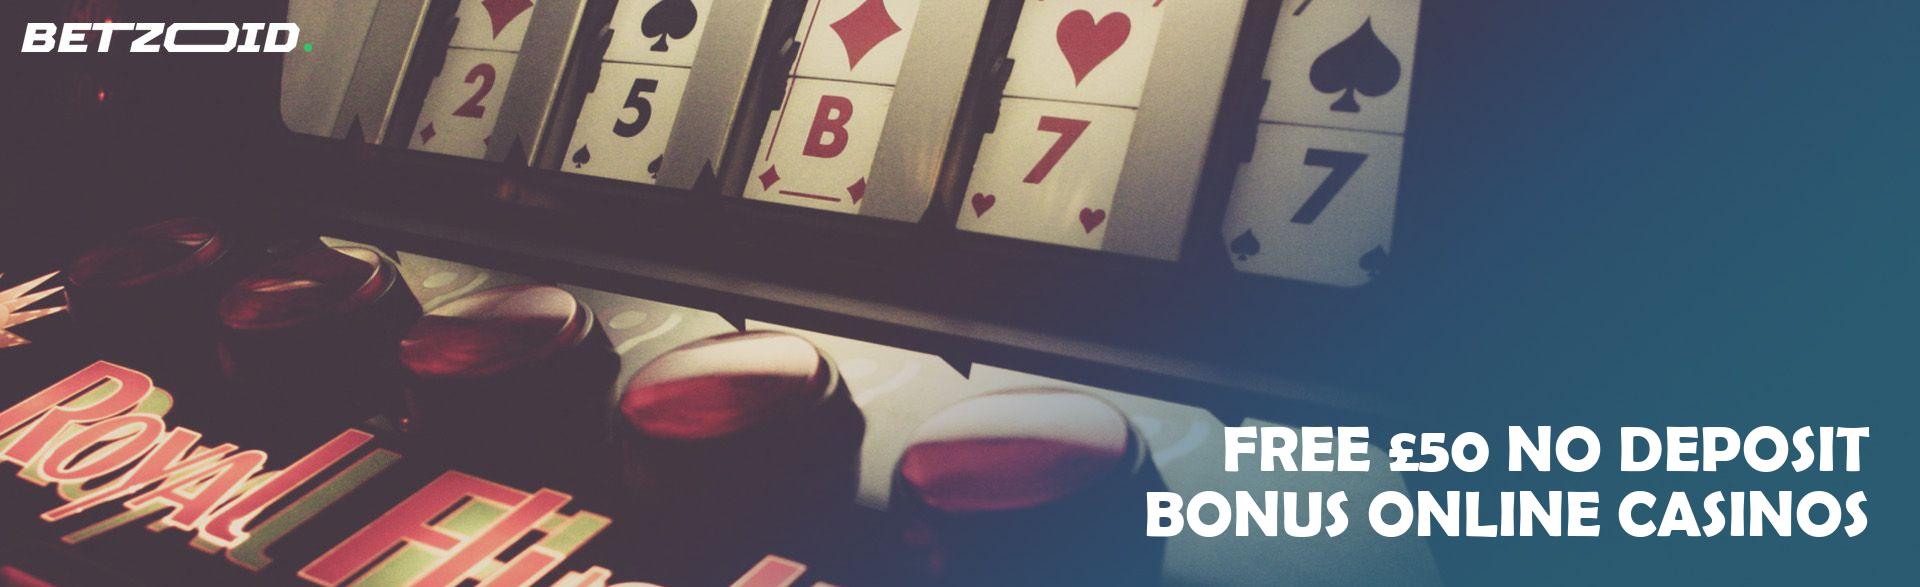 Free £50 No Deposit Bonus Online Casinos.